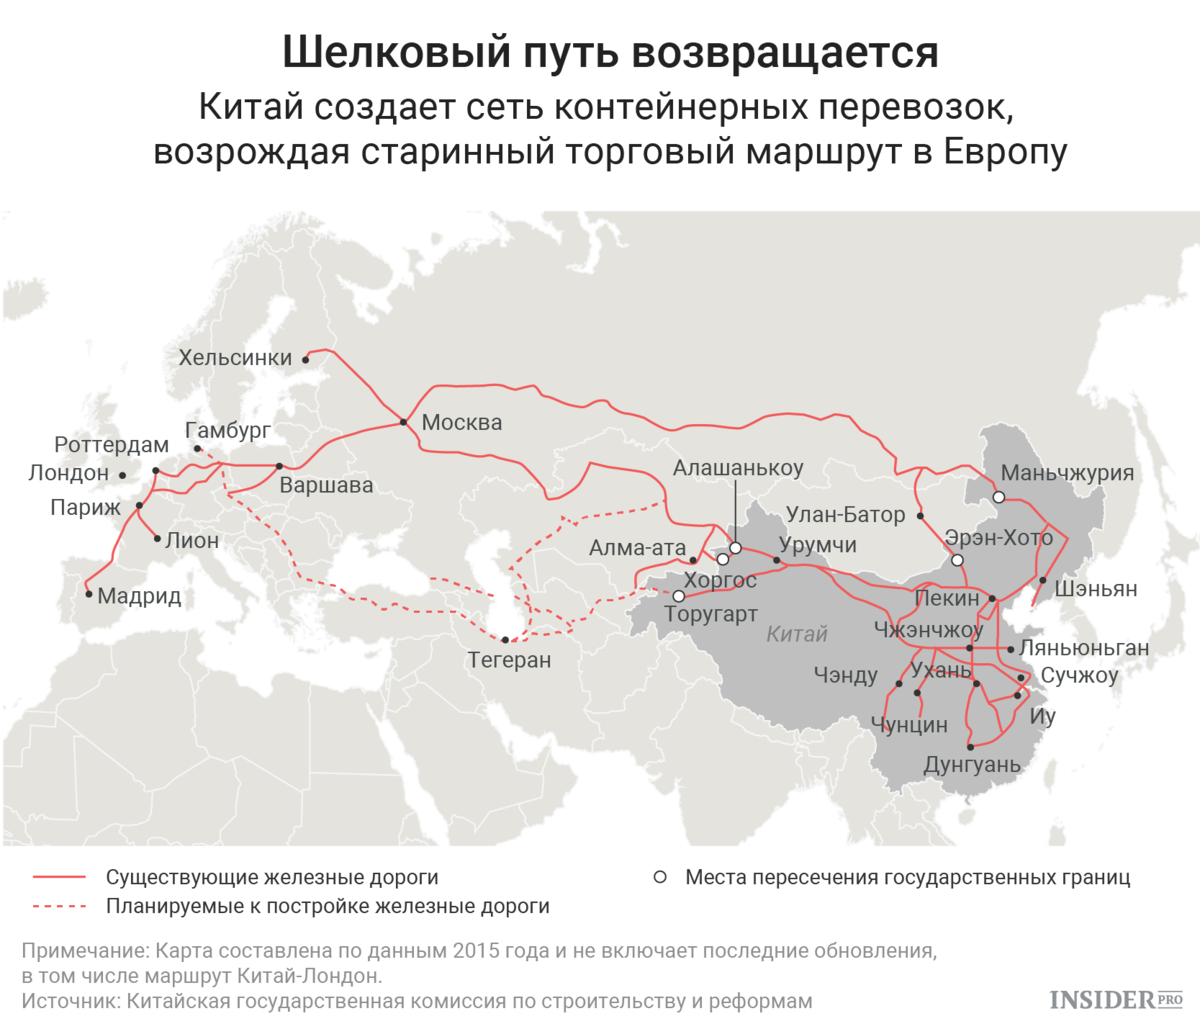 Железная дорога маршруты на карте. Железная дорога шелковый путь Китай-Европа. Шелковый путь Китая маршрут. Железная дорога новый шелковый путь Китая. Шелковый путь Китай Европа автодорога.